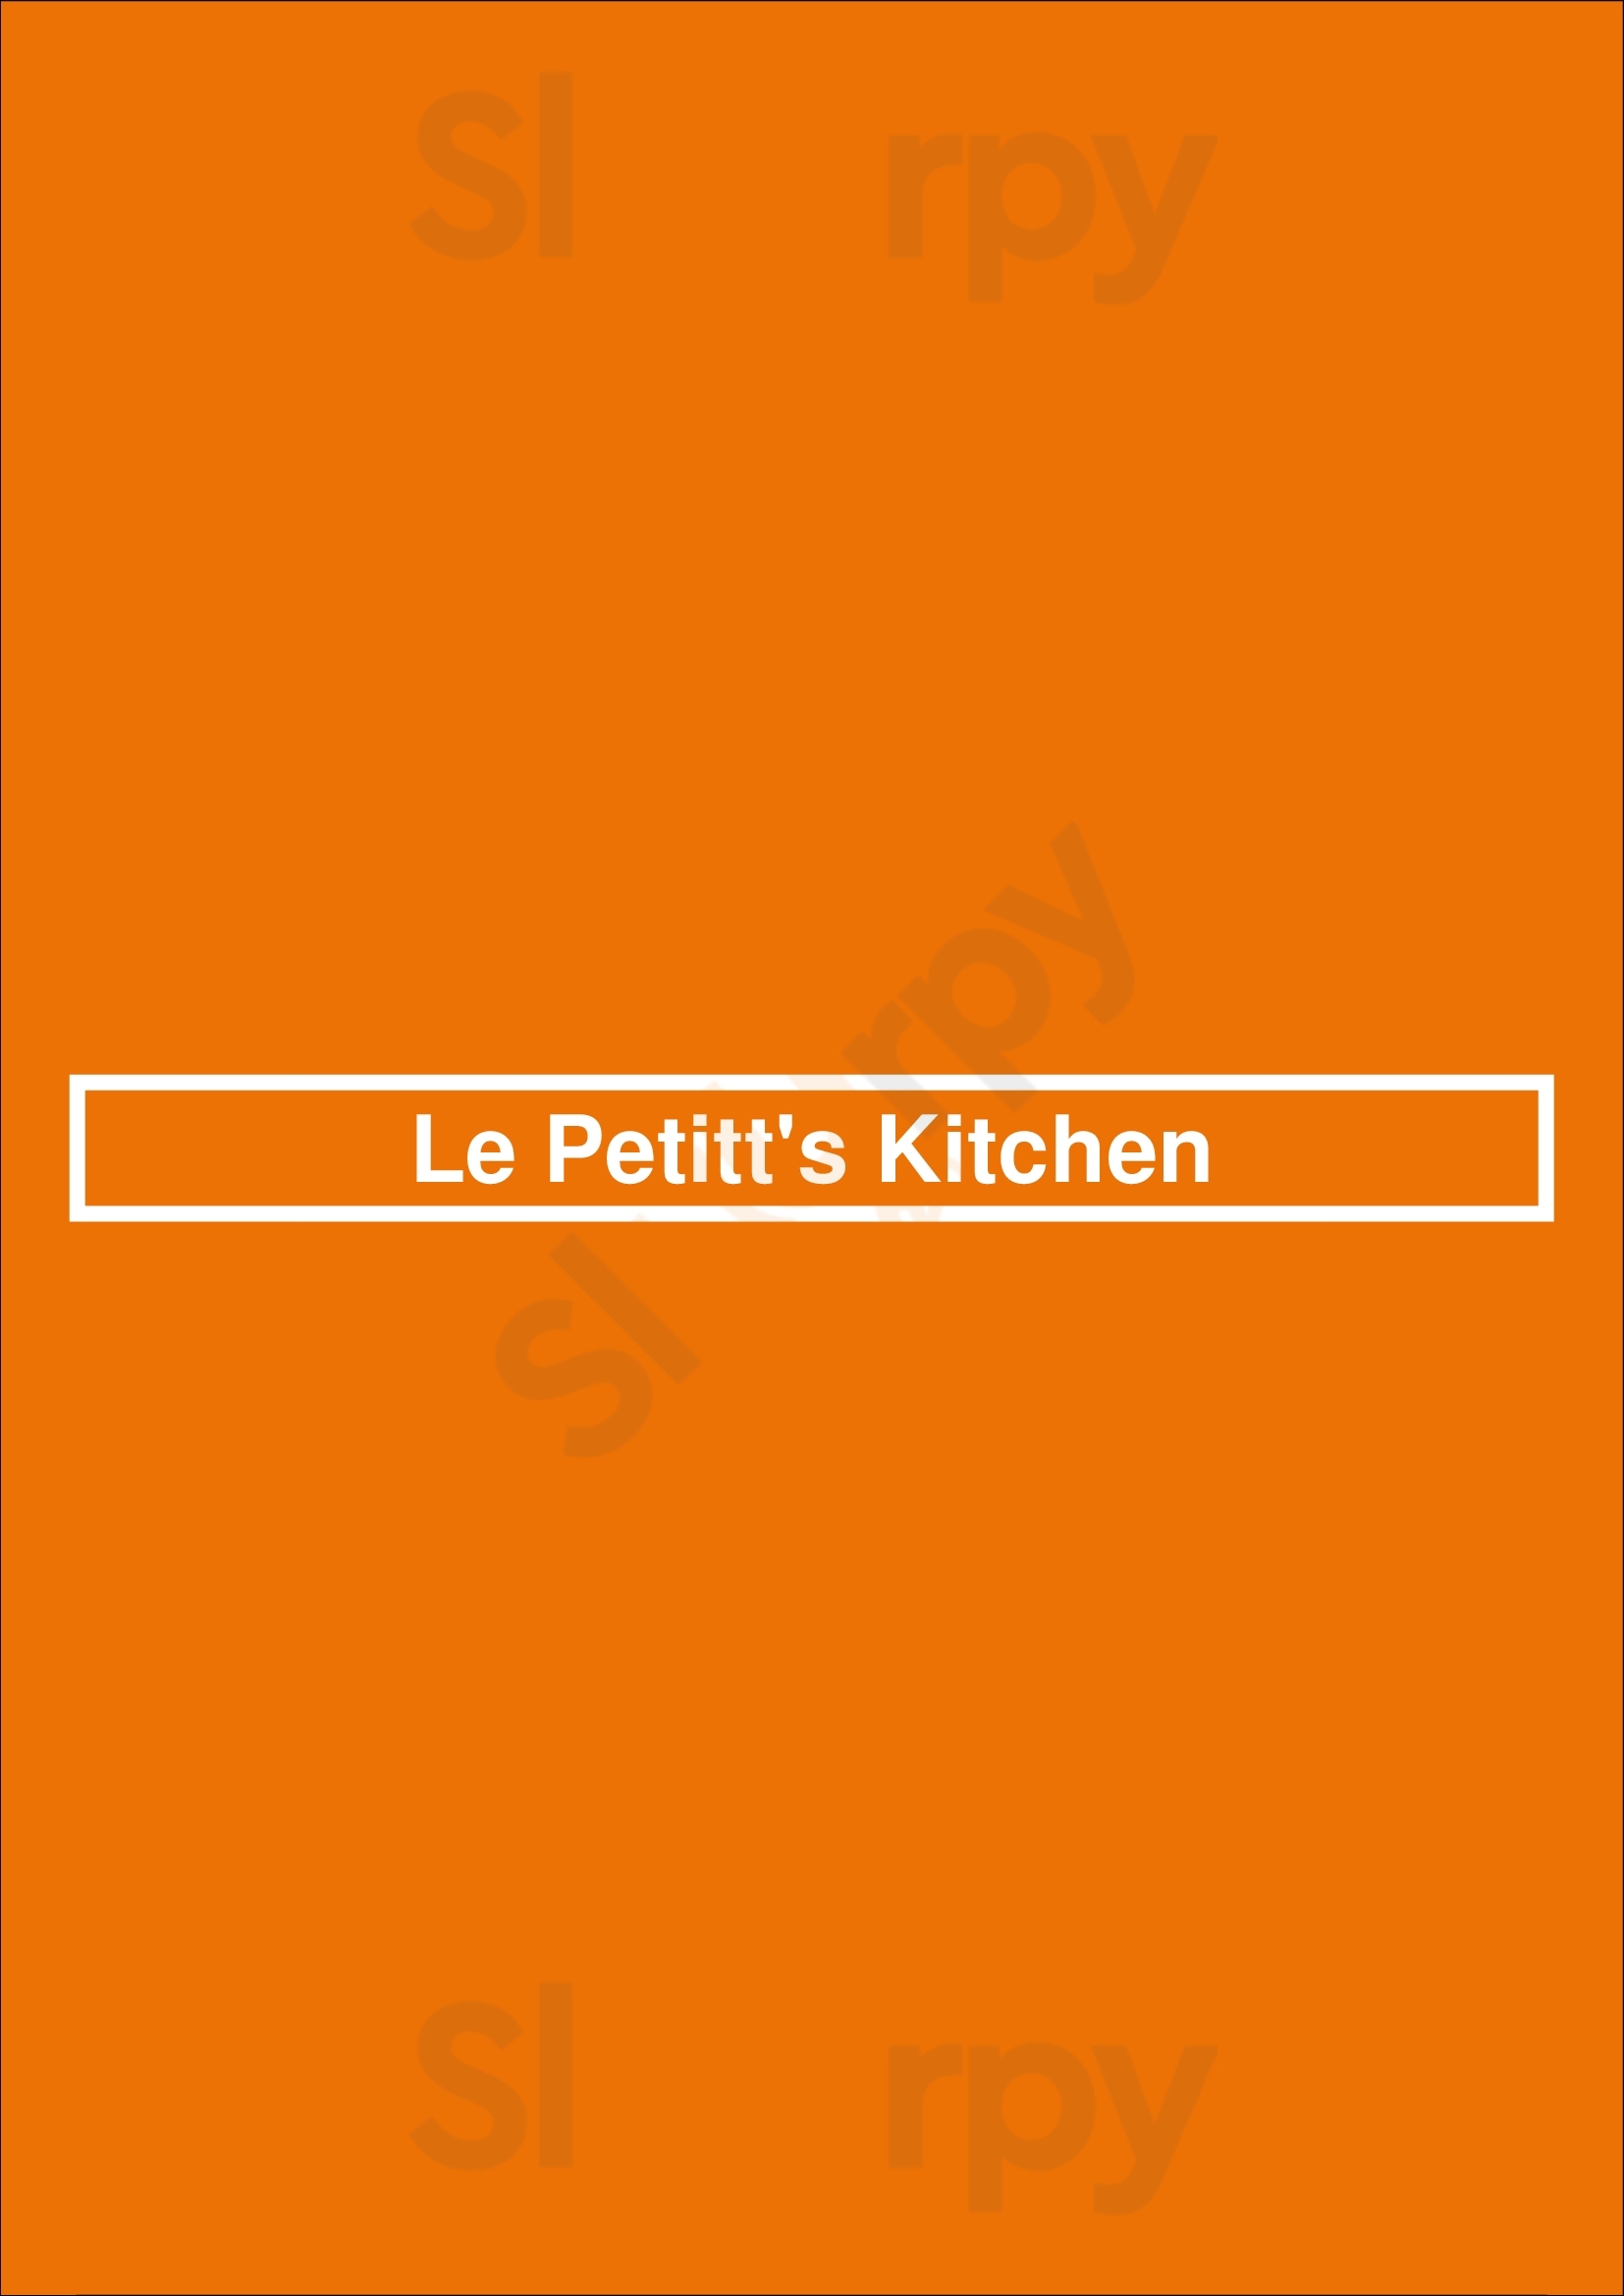 Le Petitt's Kitchen San Francisco Menu - 1